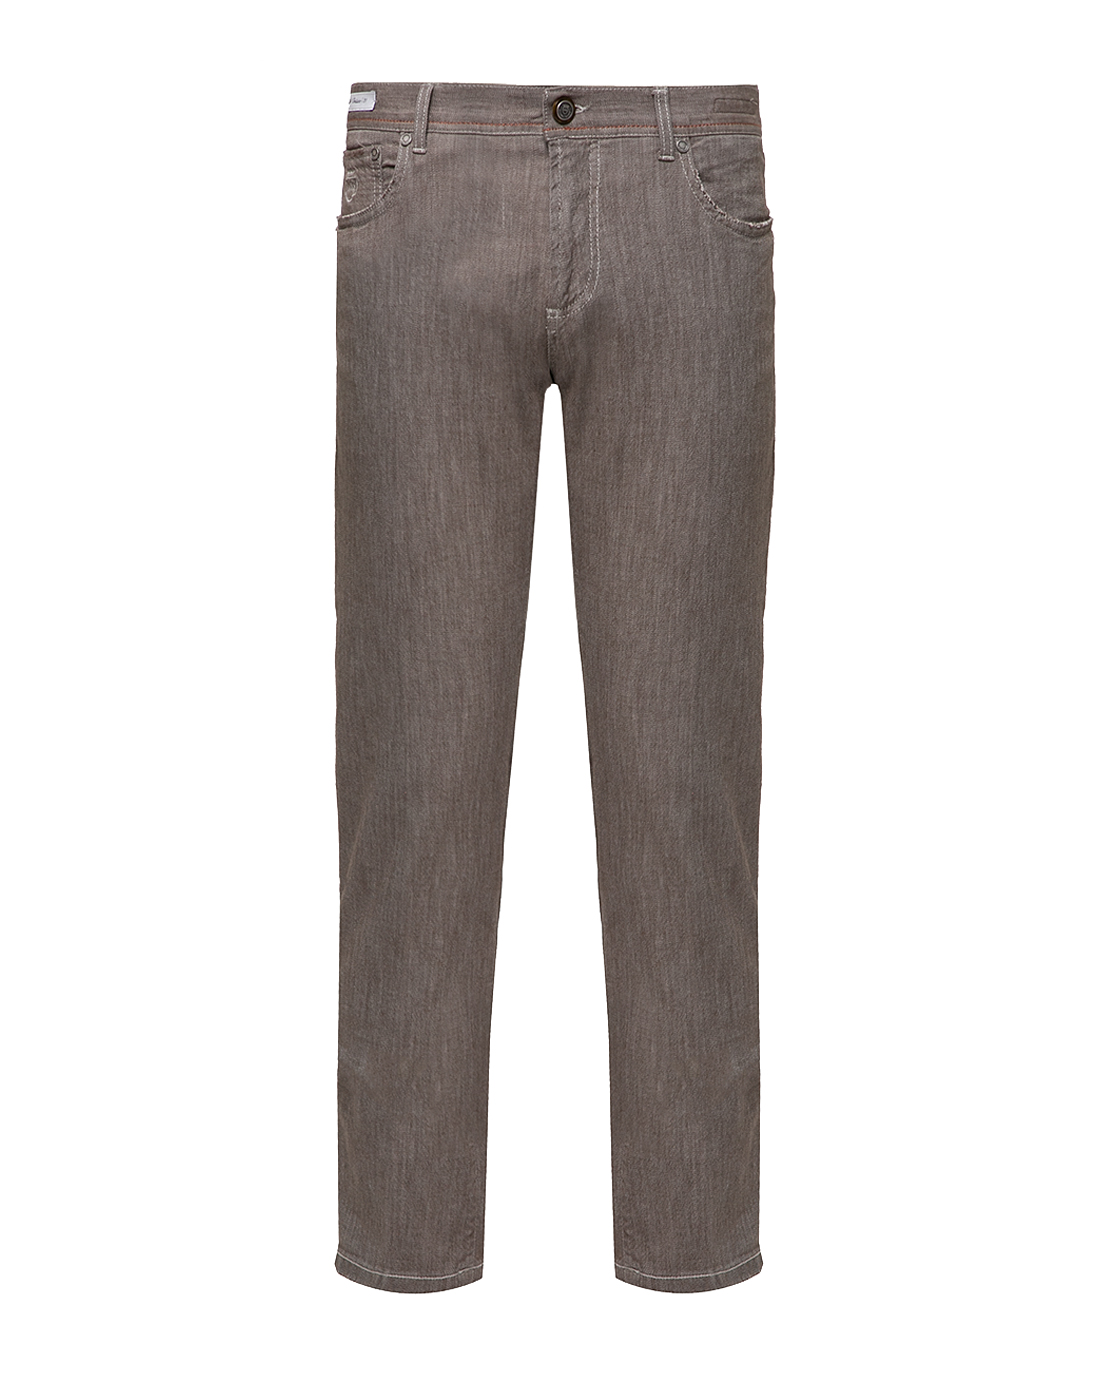 Мужские бежевые джинсы Tokyo Richard J. Brown ST162.W274-1